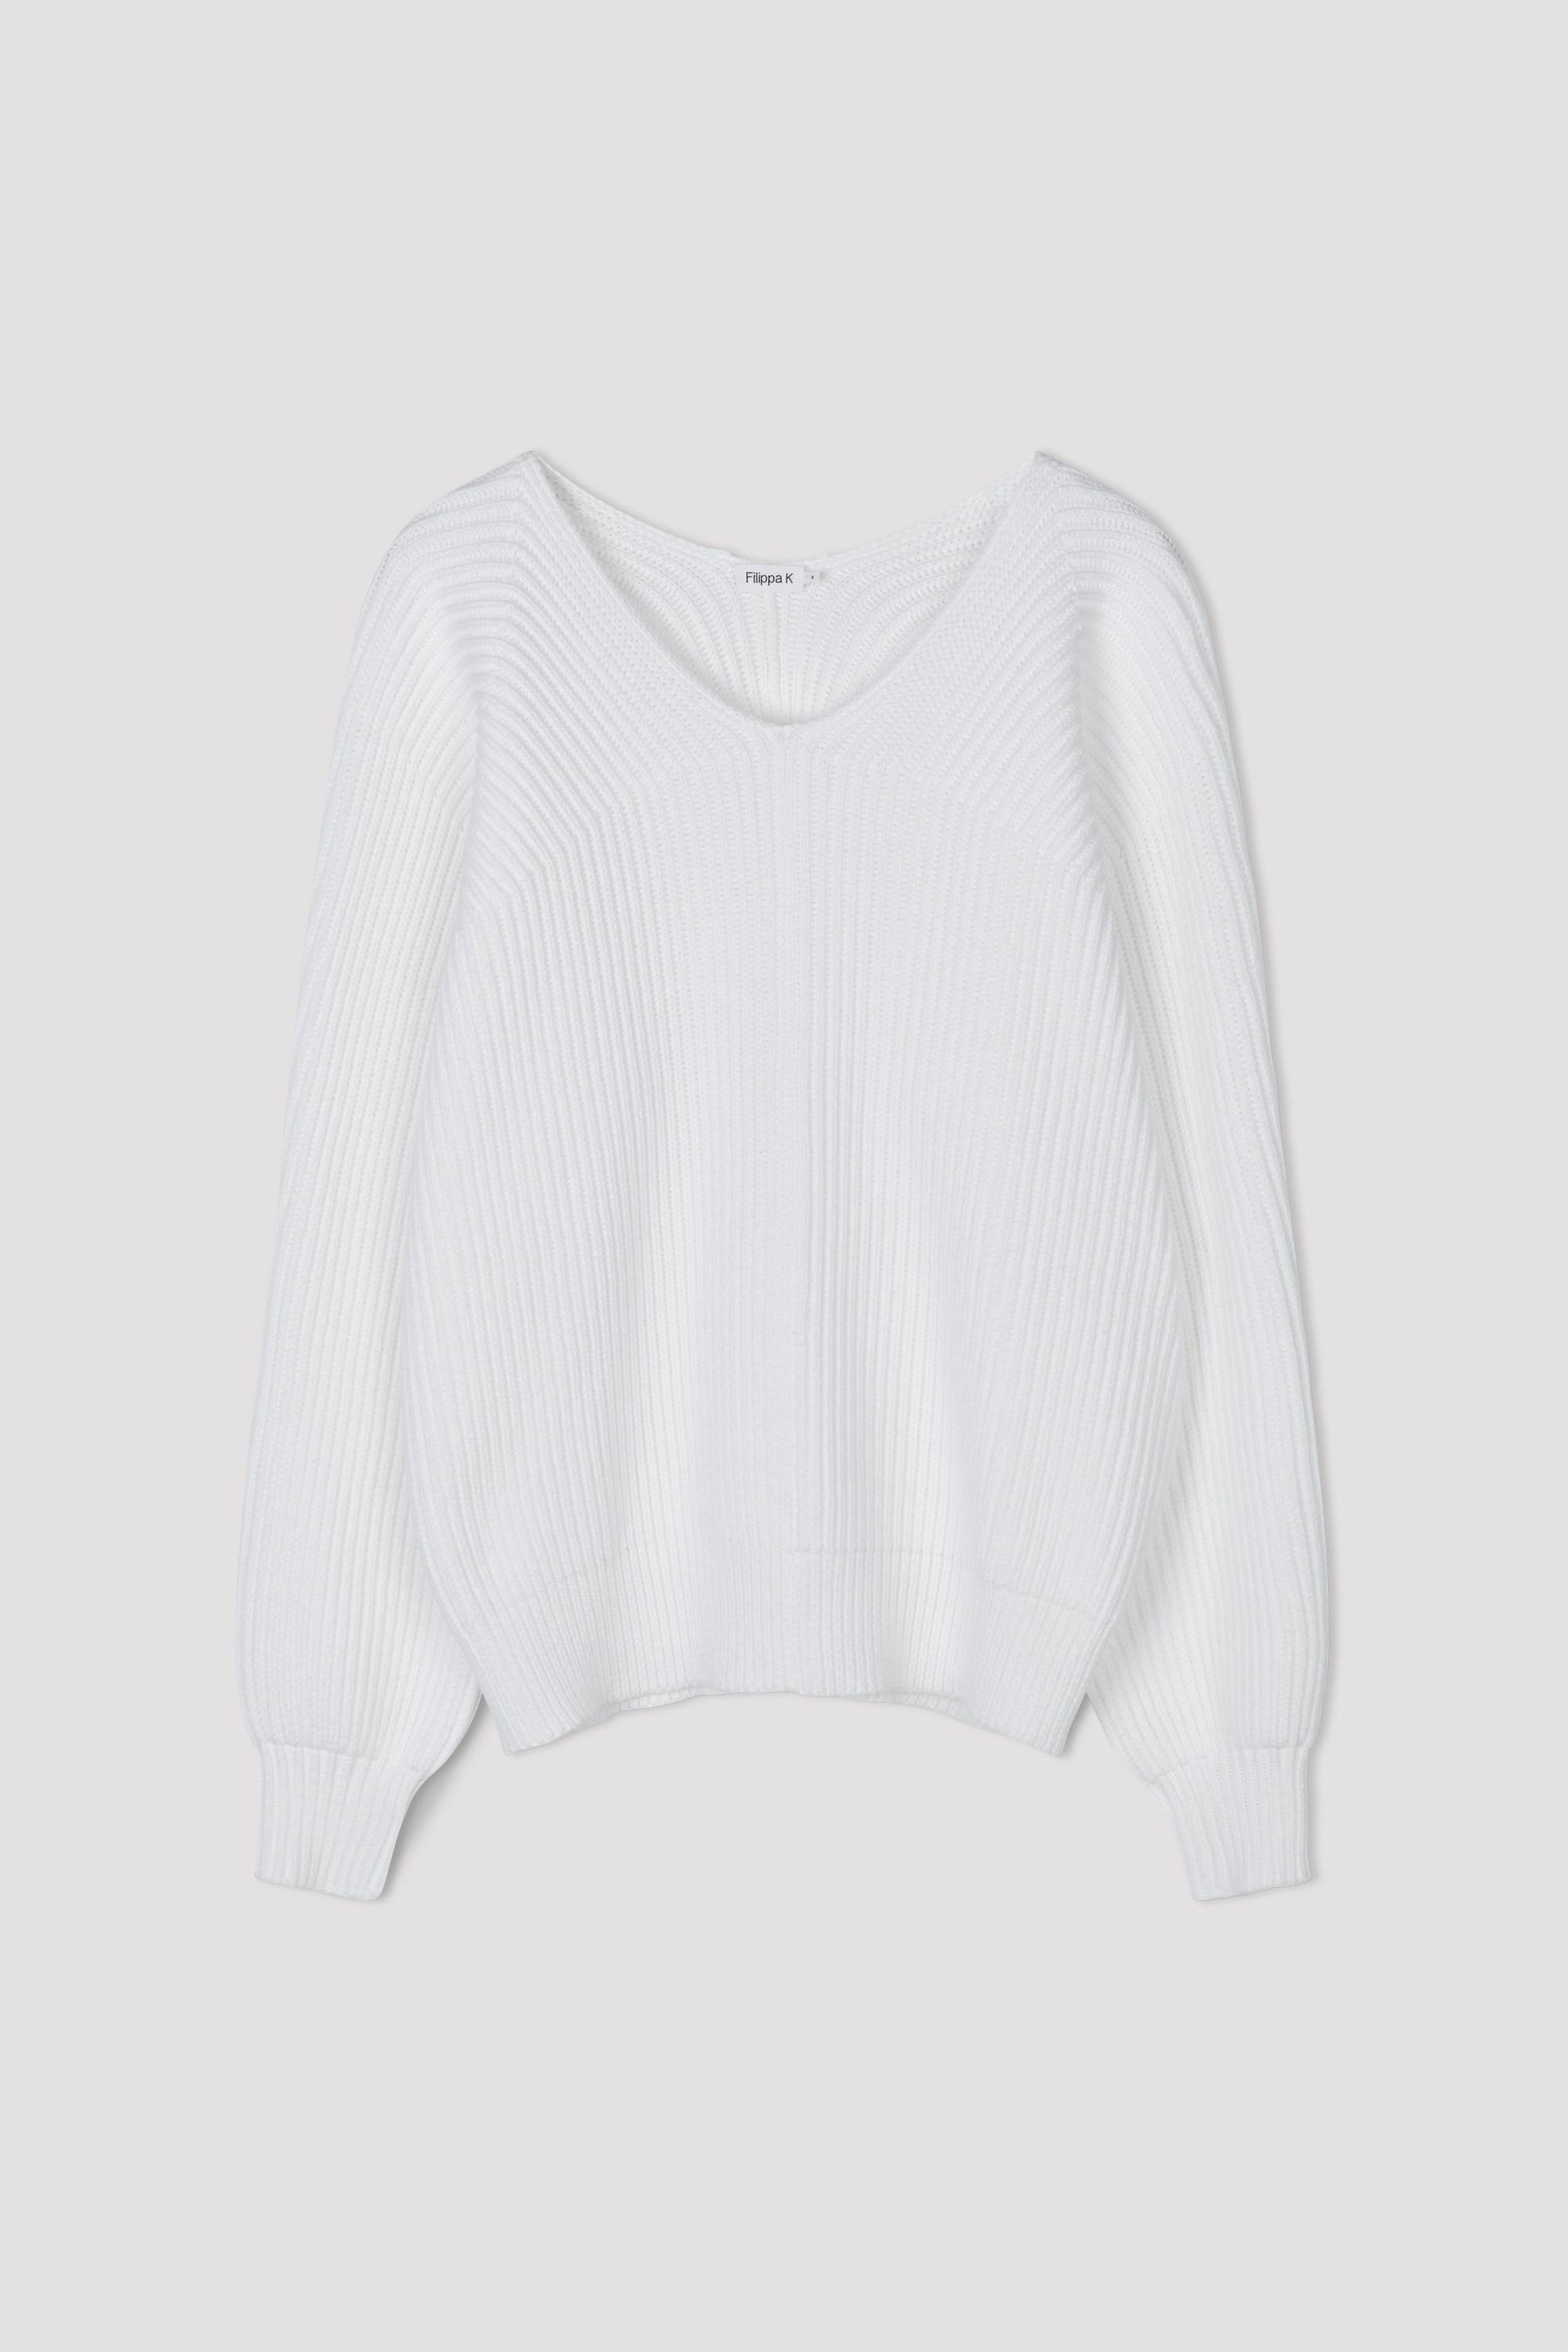 Filippa K Cotton Chunky V-neck Sweater in White - Lyst